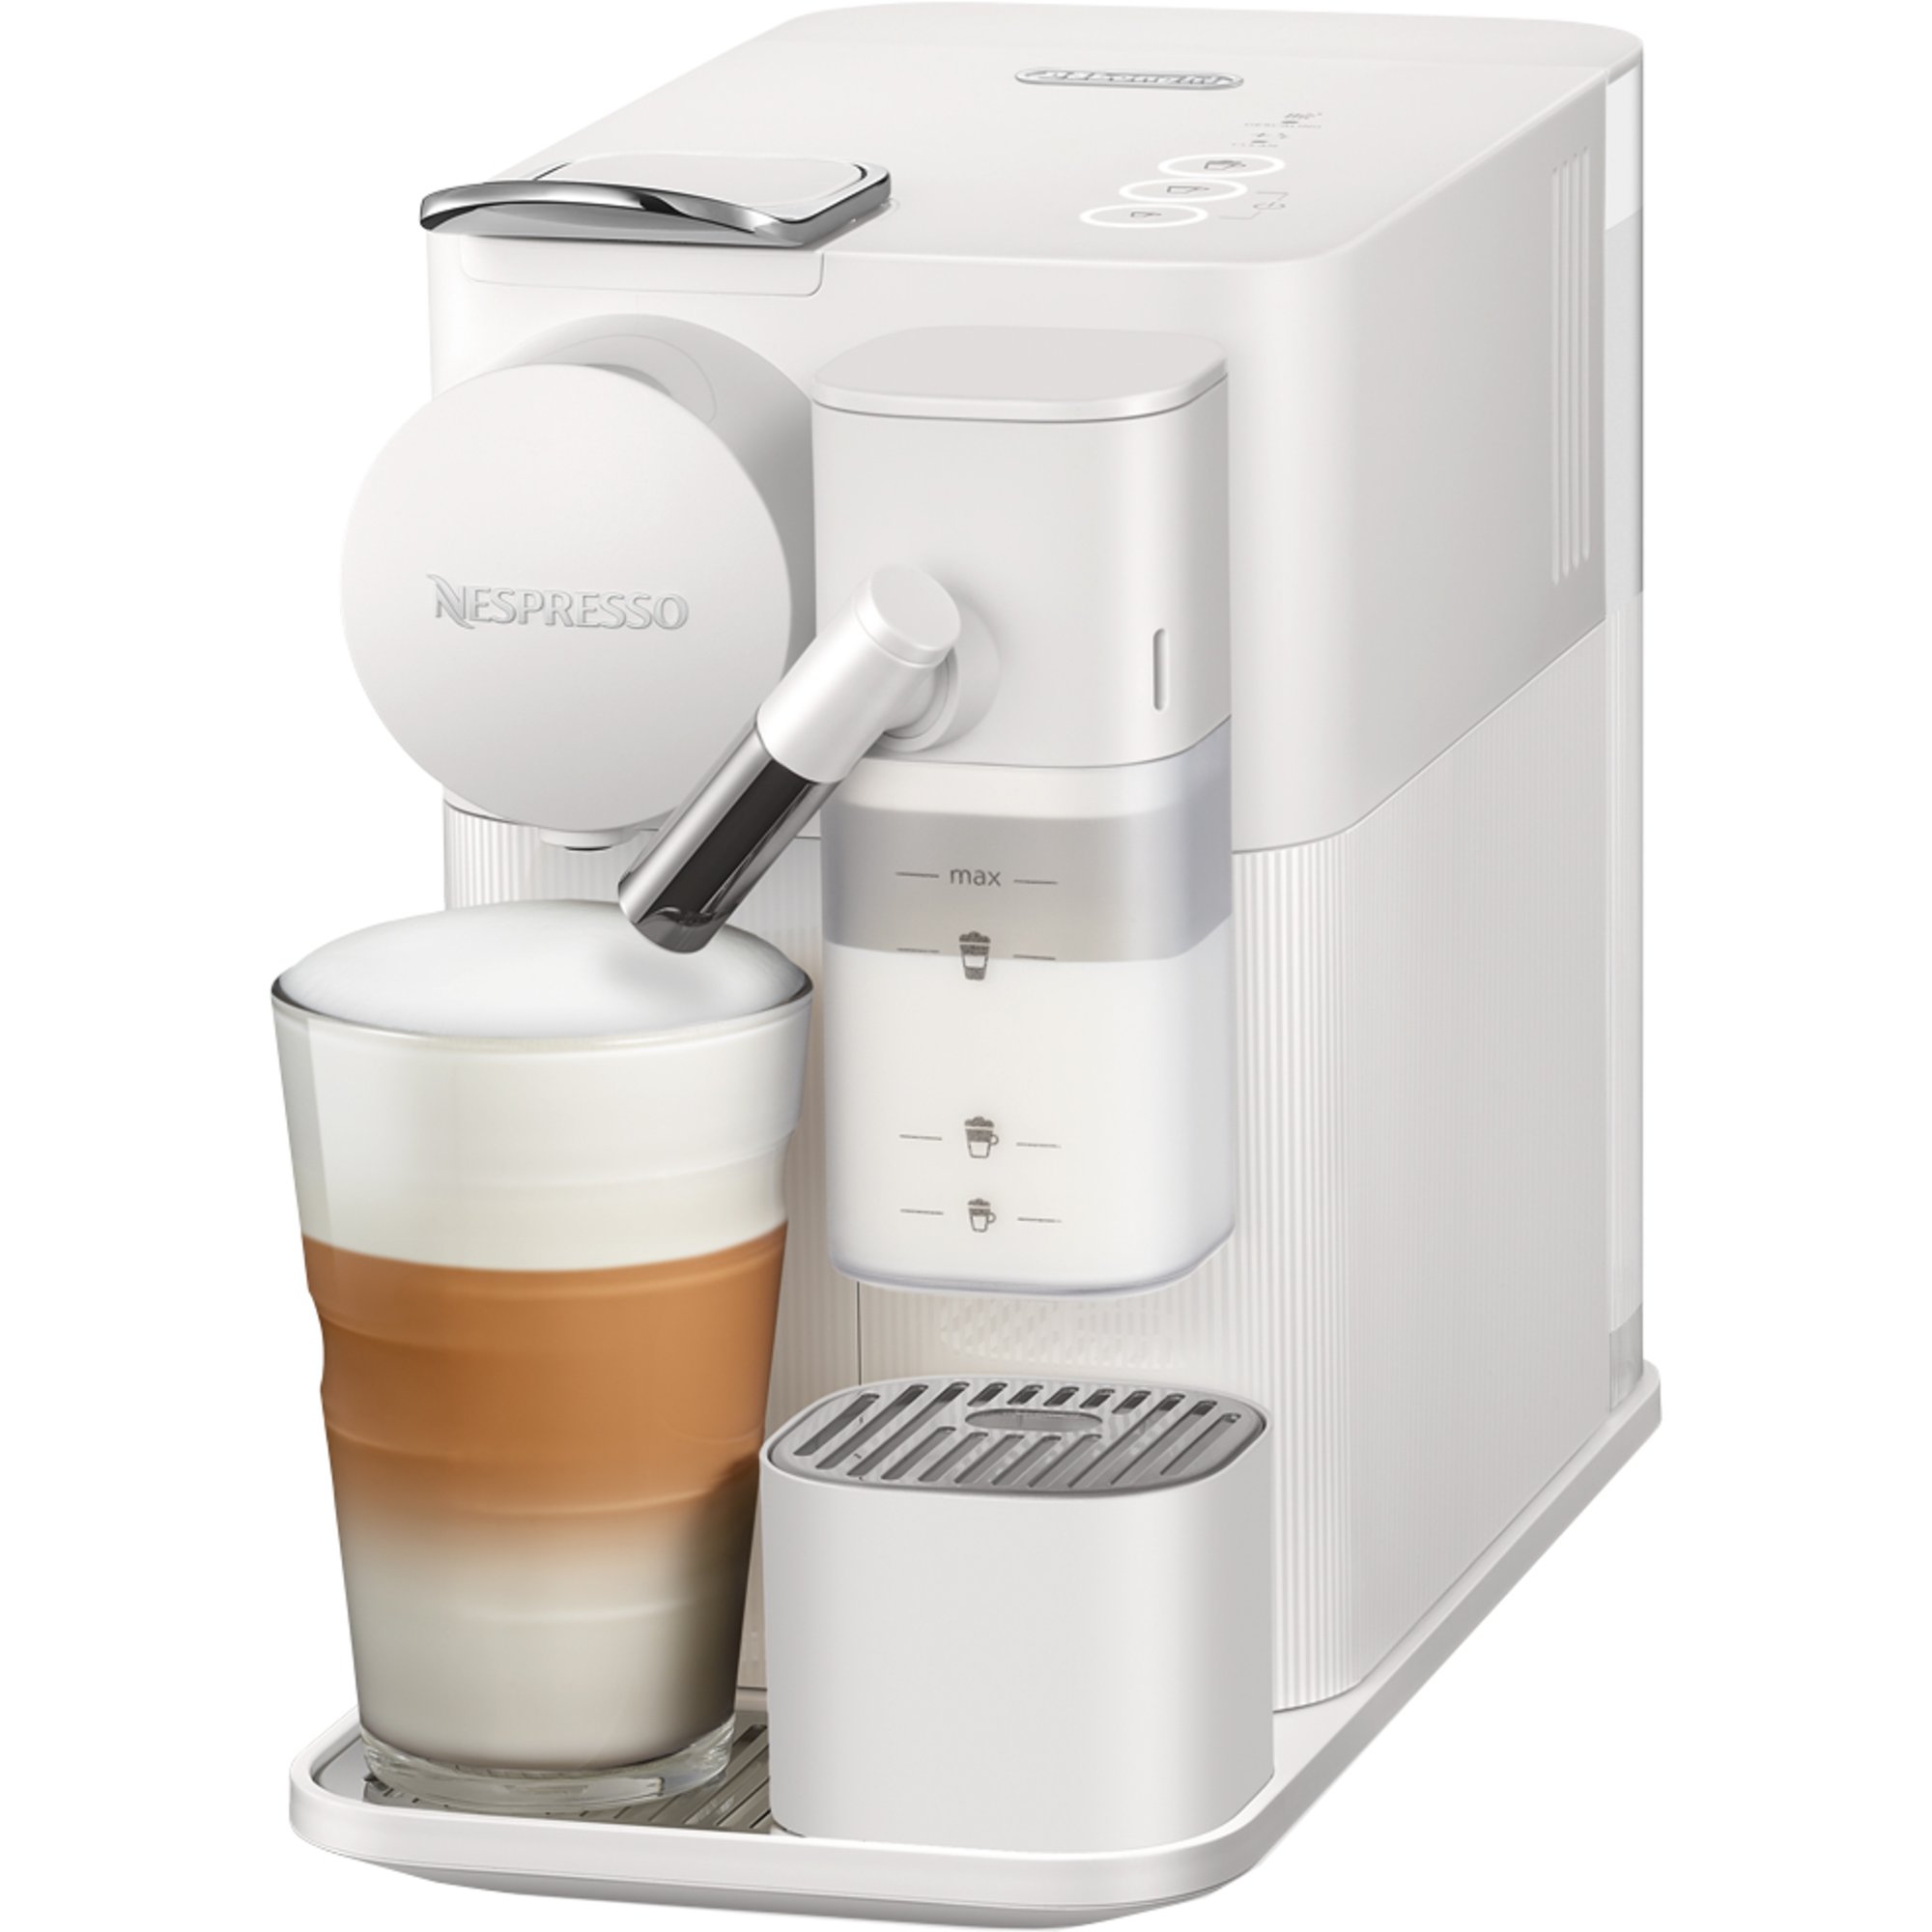 NESPRESSO Lattissima One kaffemaskine fra De'Longhi - Silky White